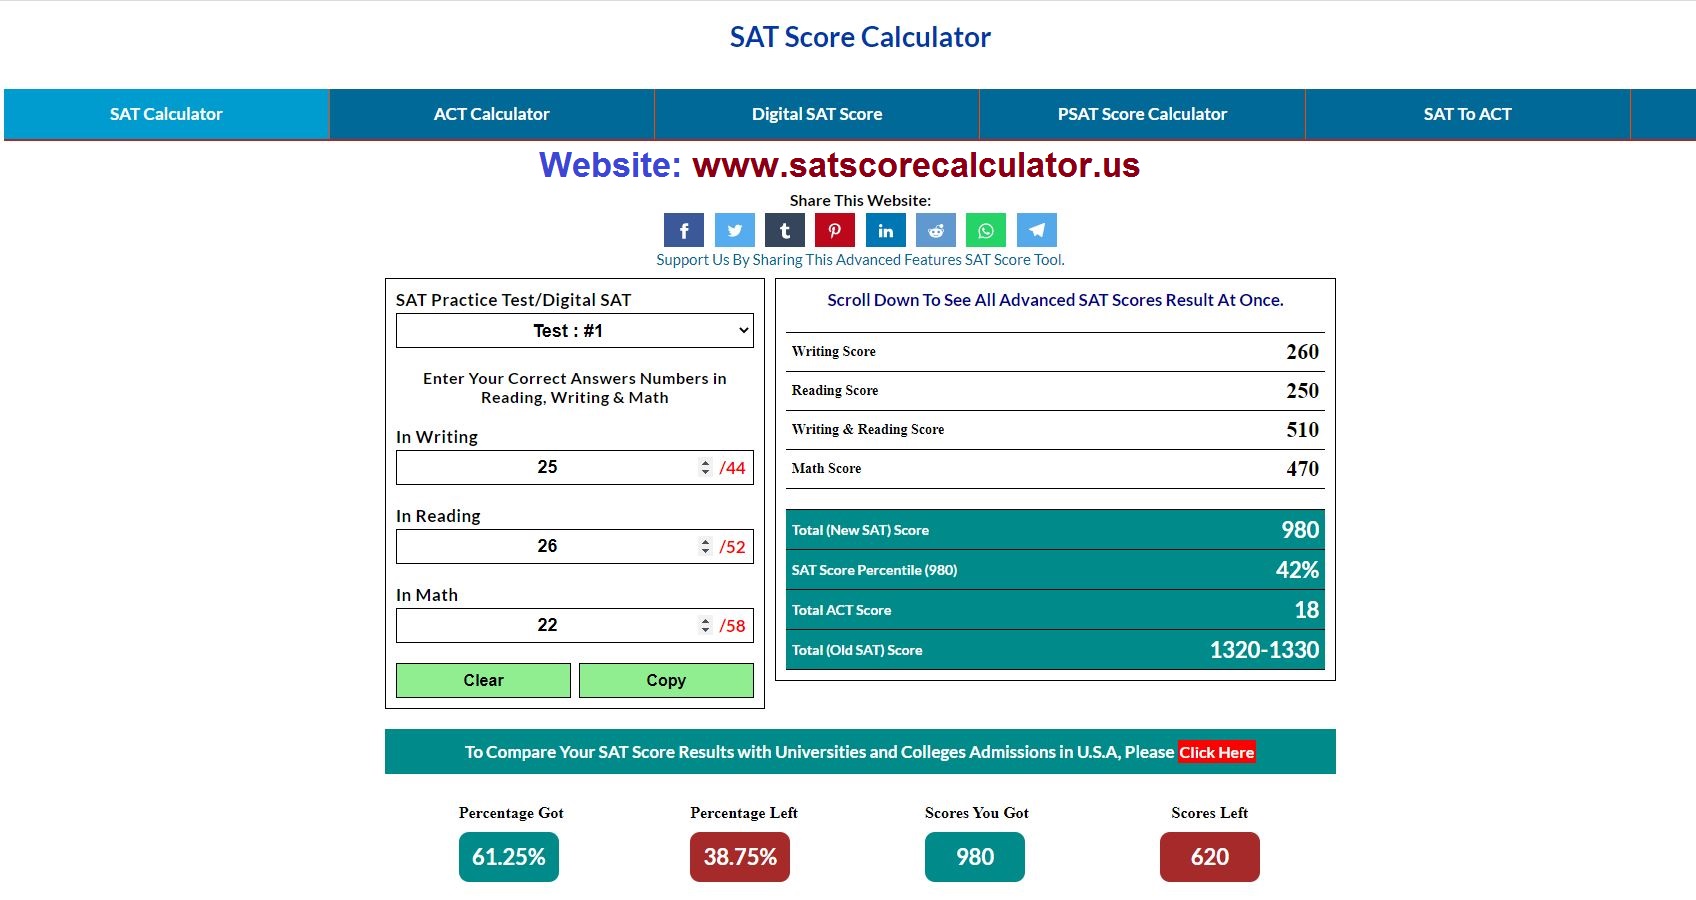 SATScoreCalculator.us SAT Score Calculator